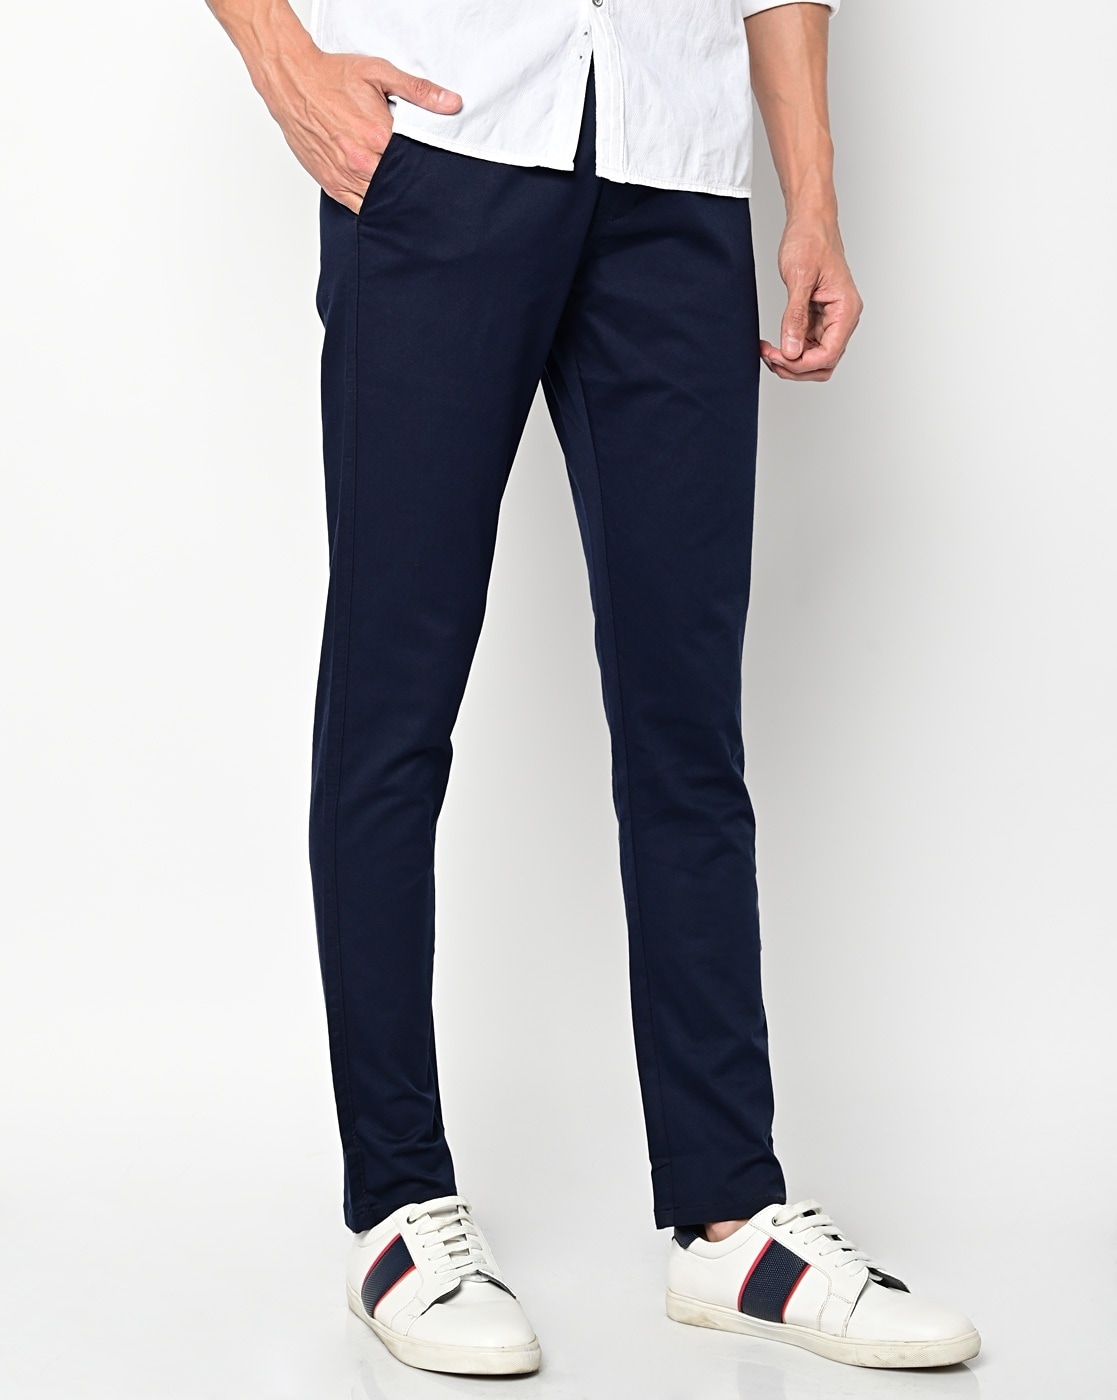 High Quality Mens Cotton Blend Slim Fit Jeans Trousers Dark Blue | van Laack